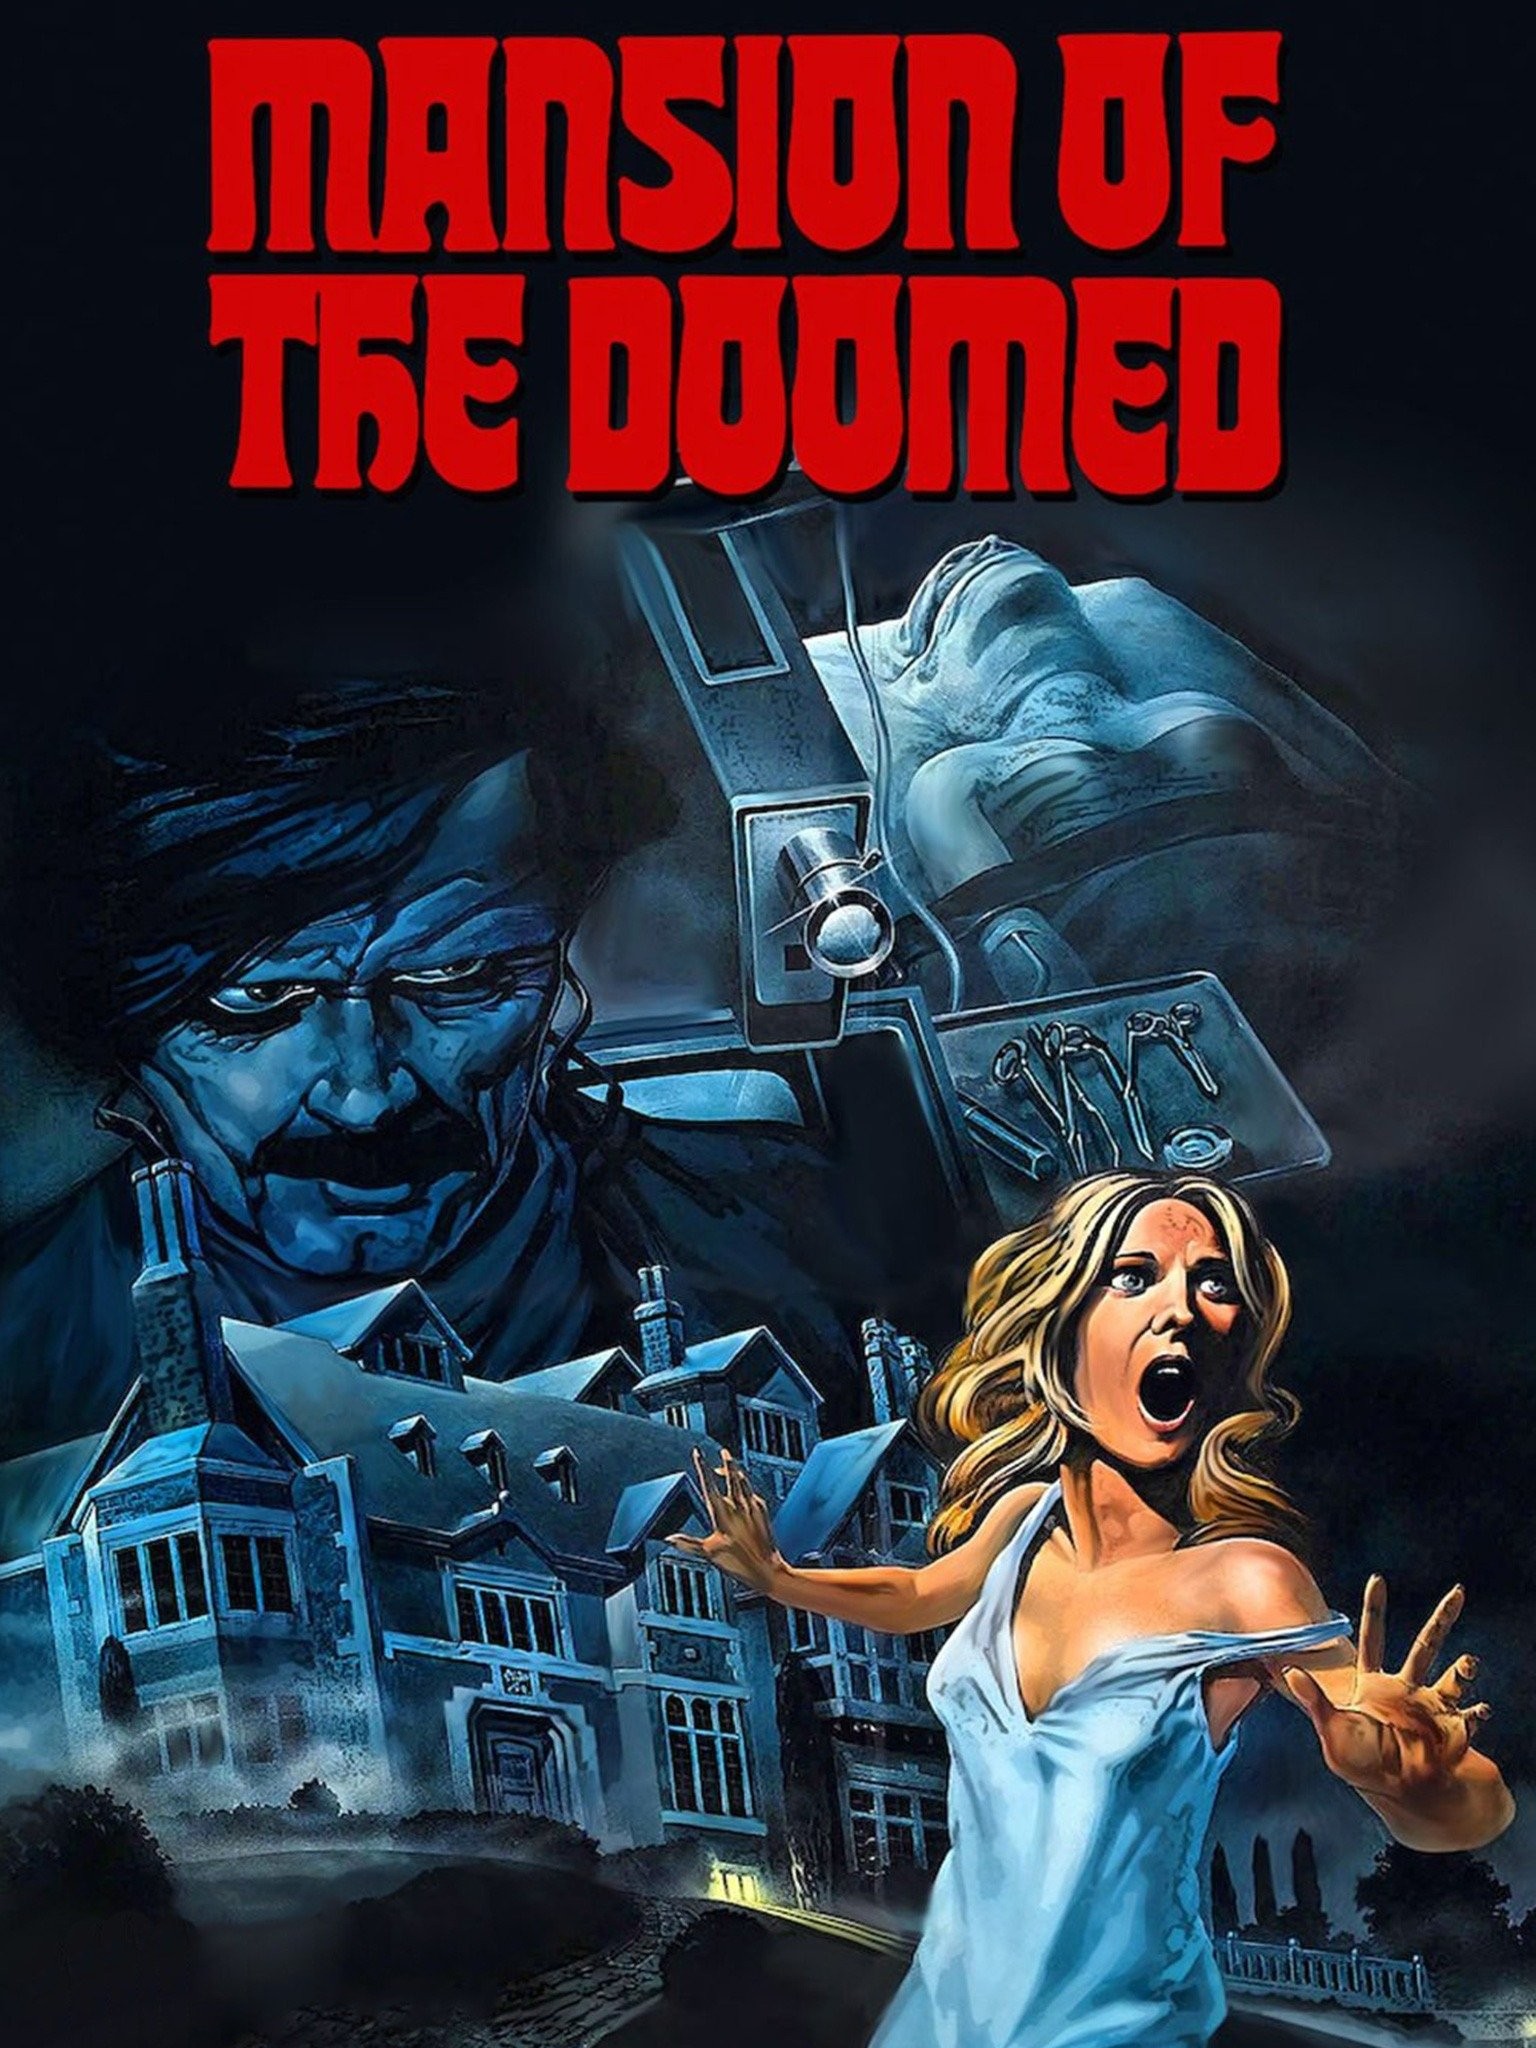 Bridge of the Doomed - Rotten Tomatoes